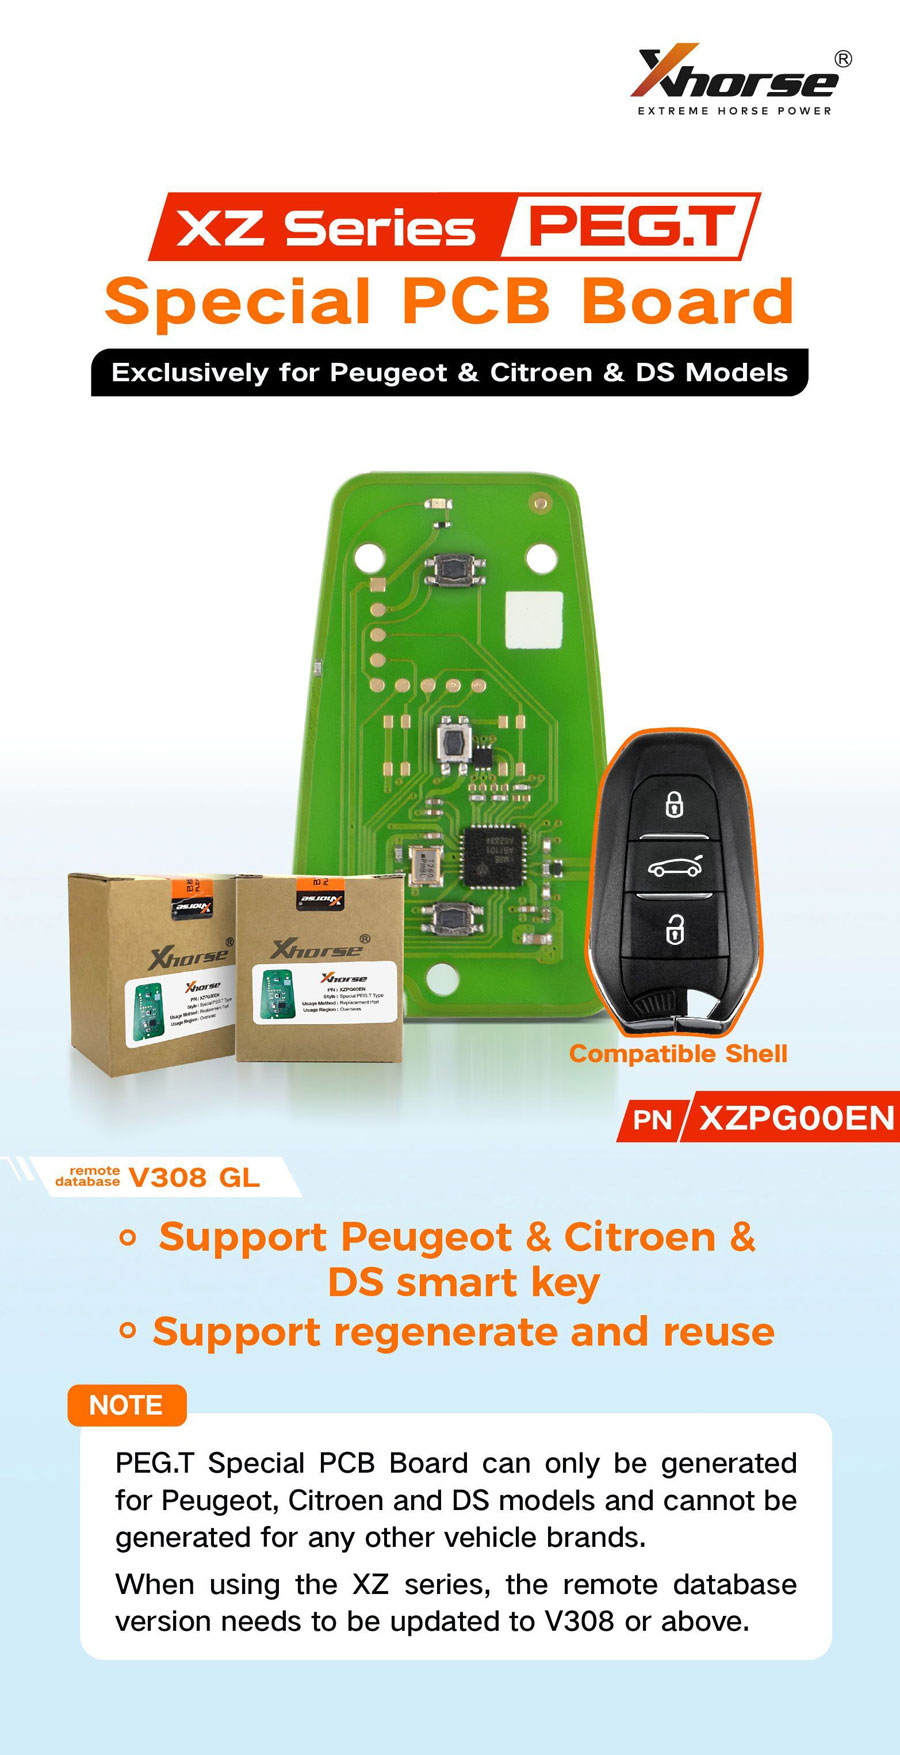 XHORSE XZPG00EN Special PCB Board